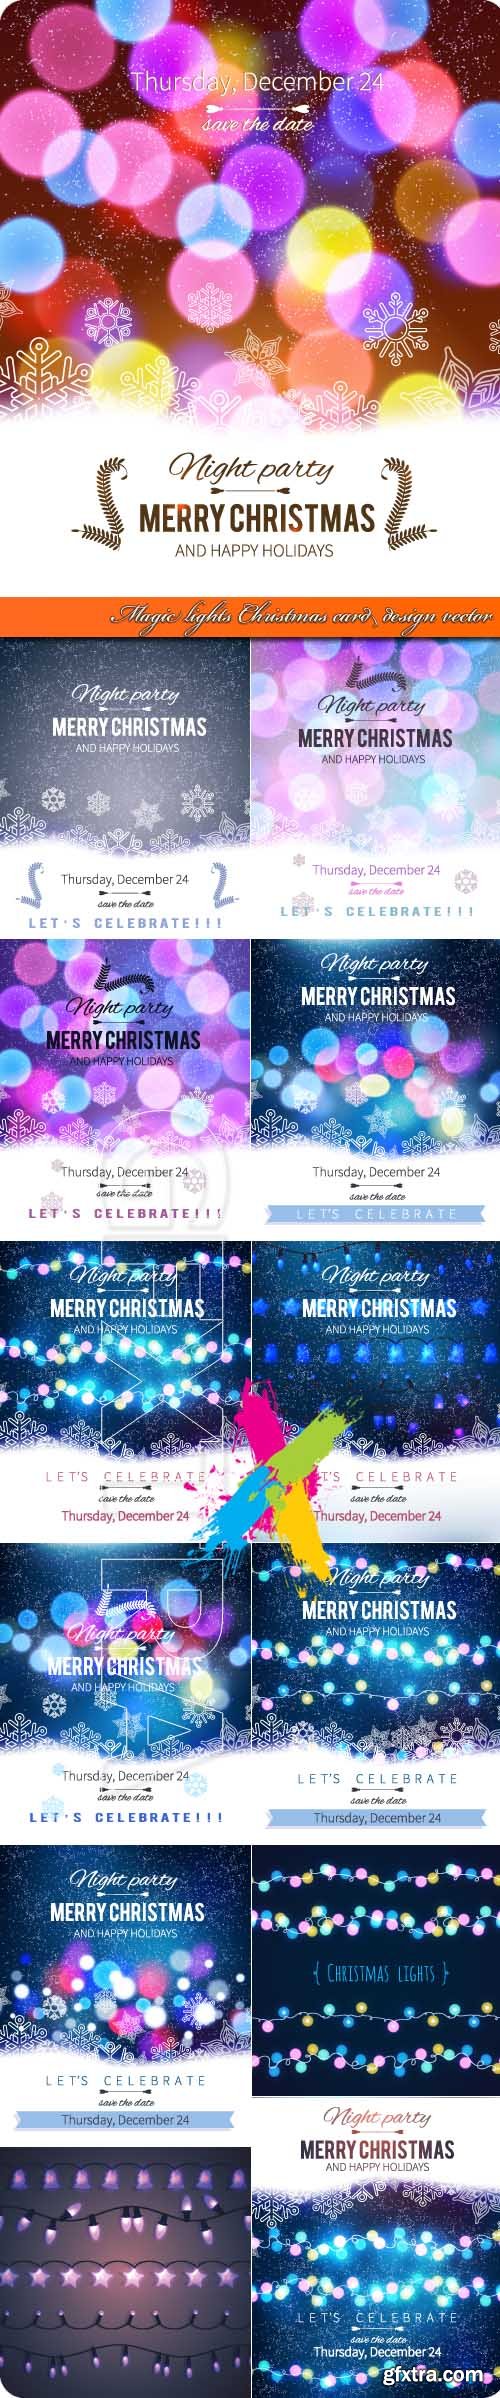 Magic lights Christmas card design vector